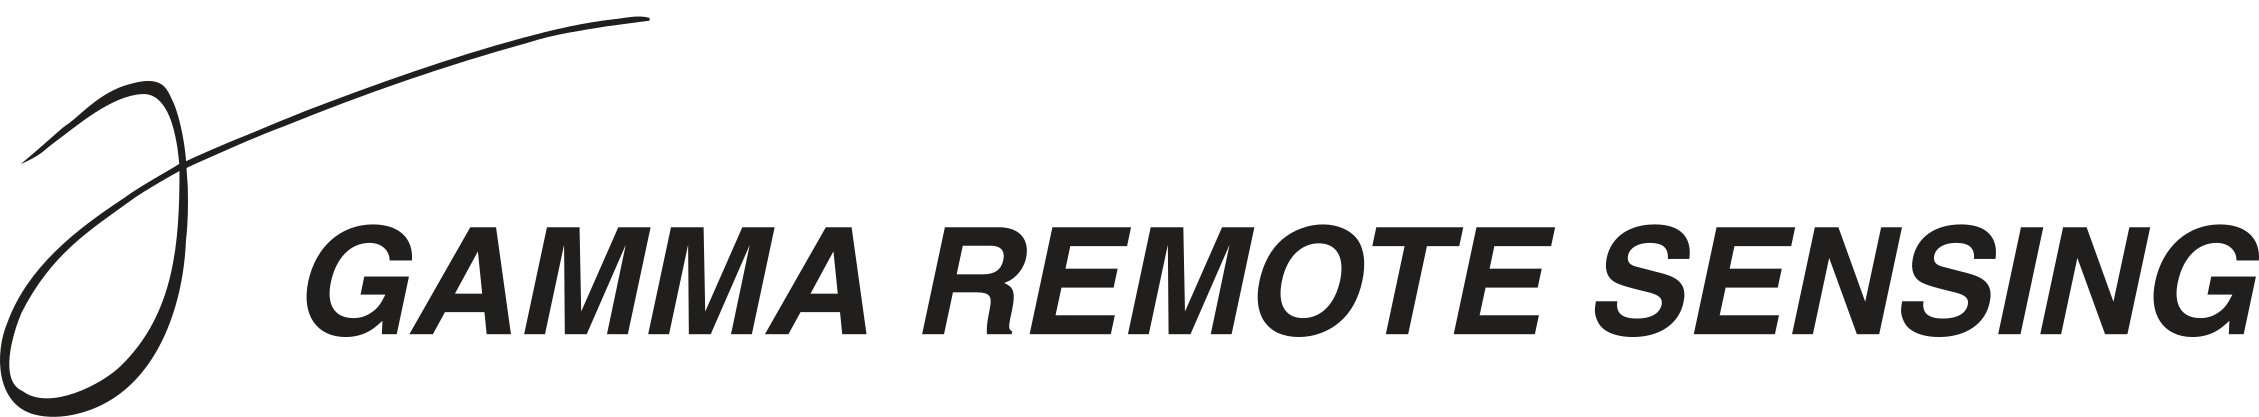 GAMMA Remote Searching Logo